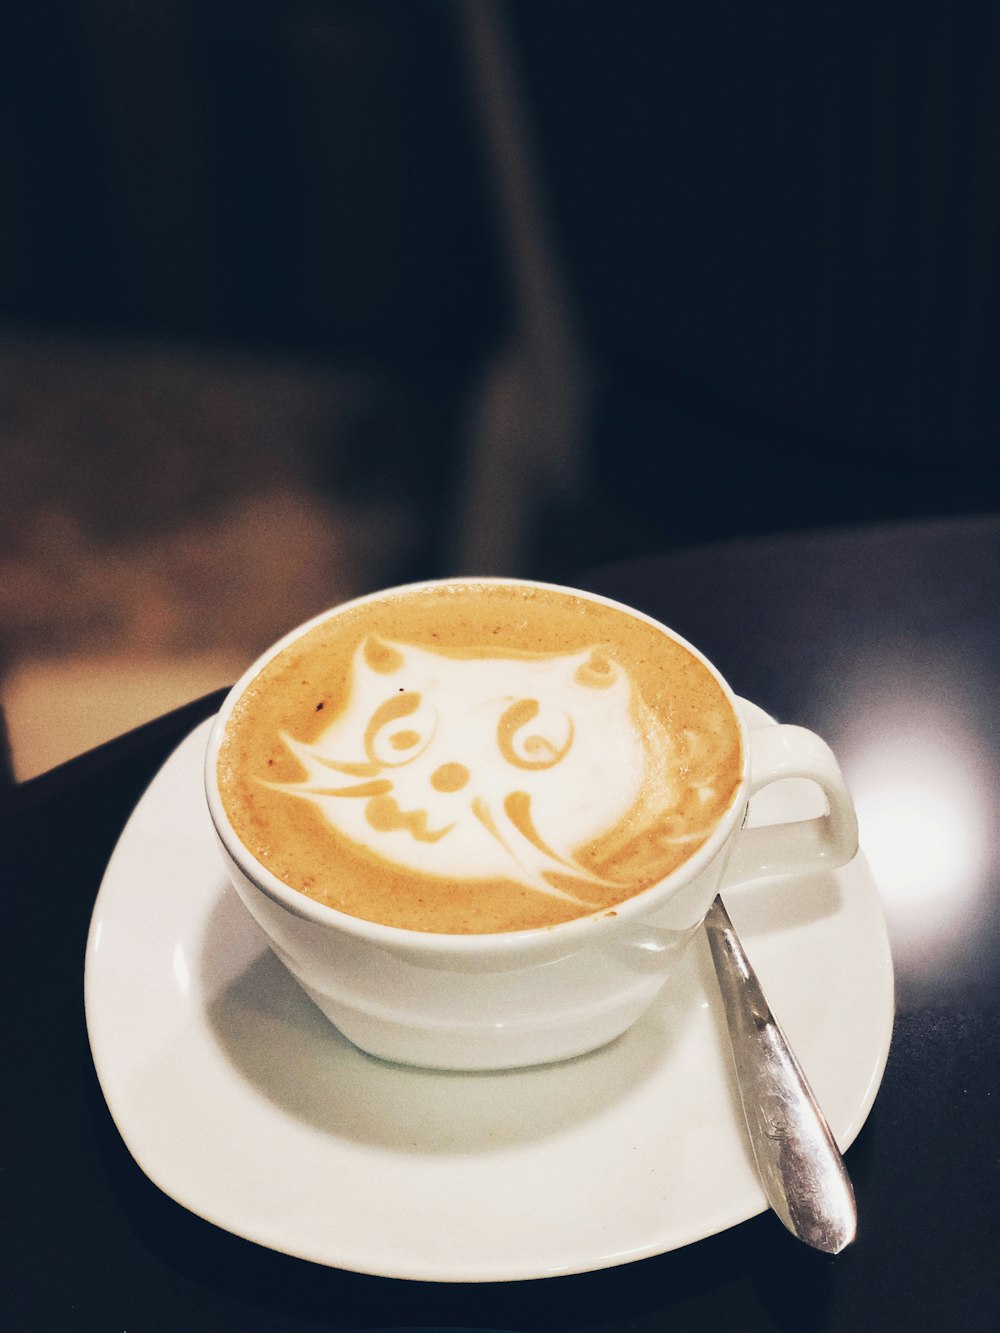 white ceramic teacup with latte art